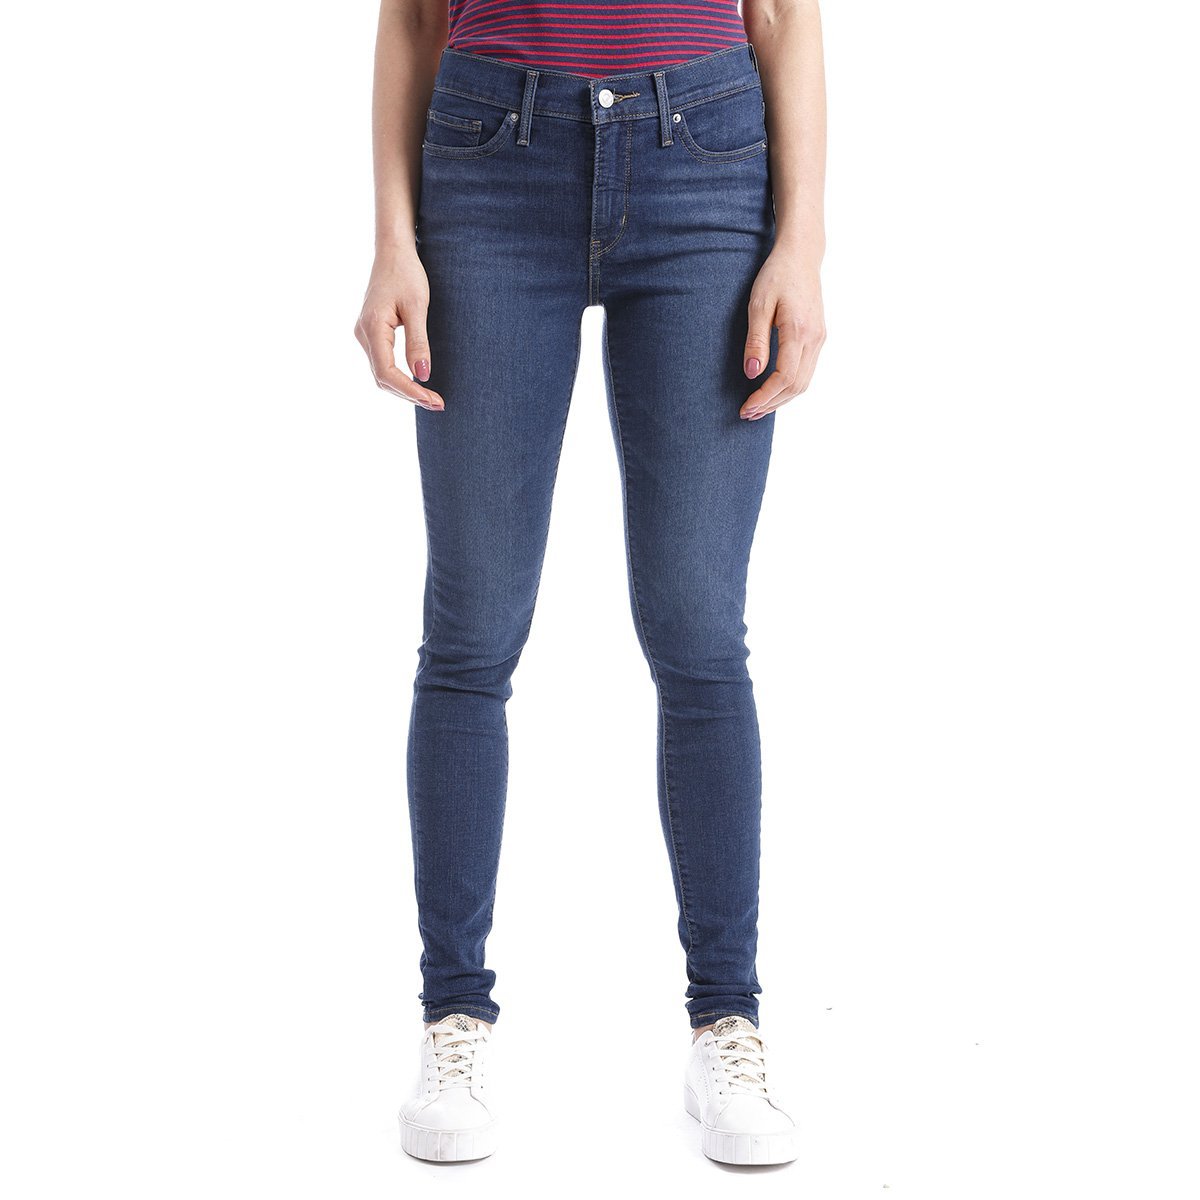 Jeans Súper Skinny Levis para Mujer